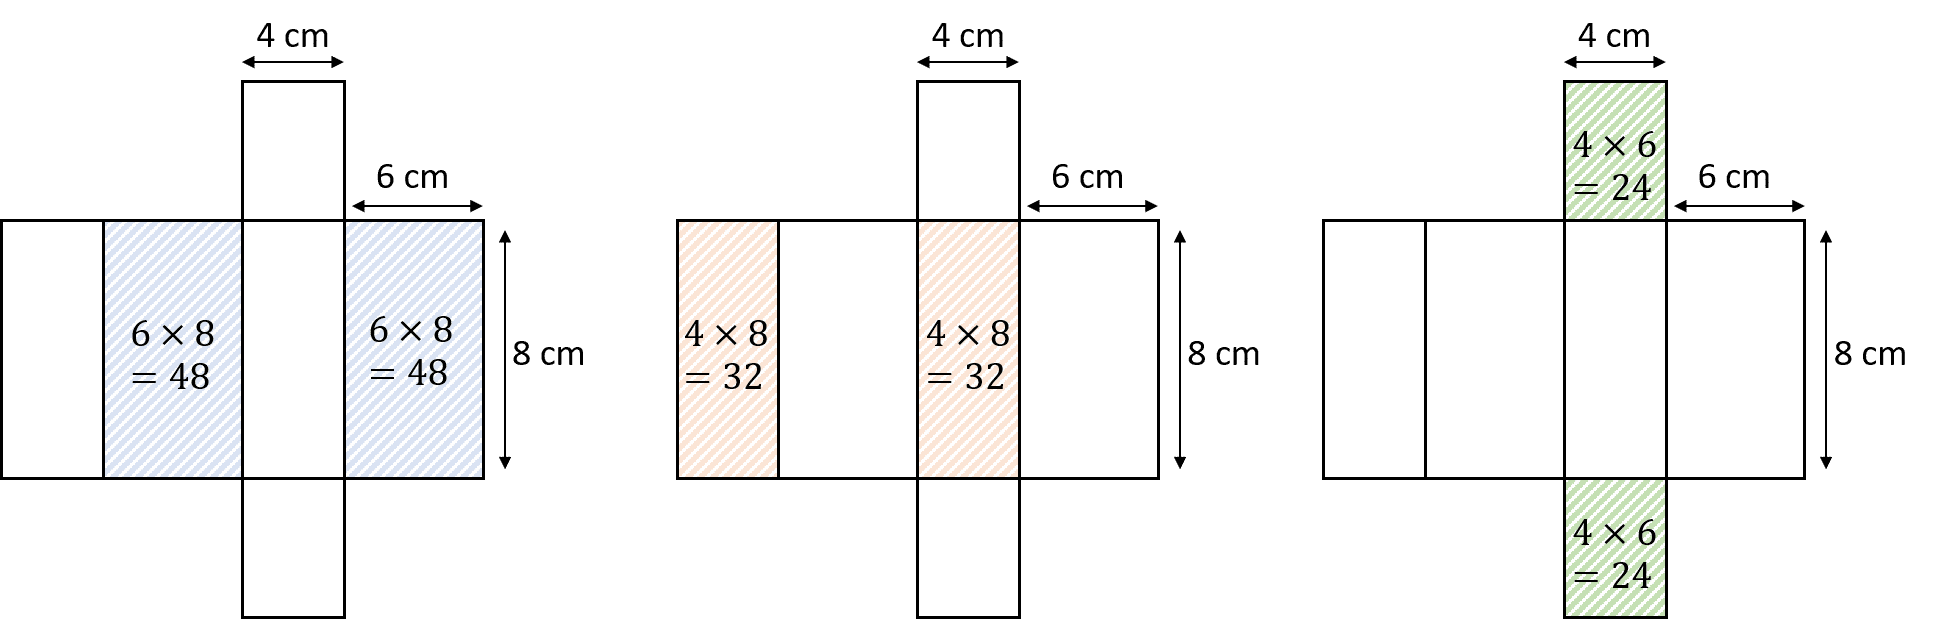 cuboid surface area nets